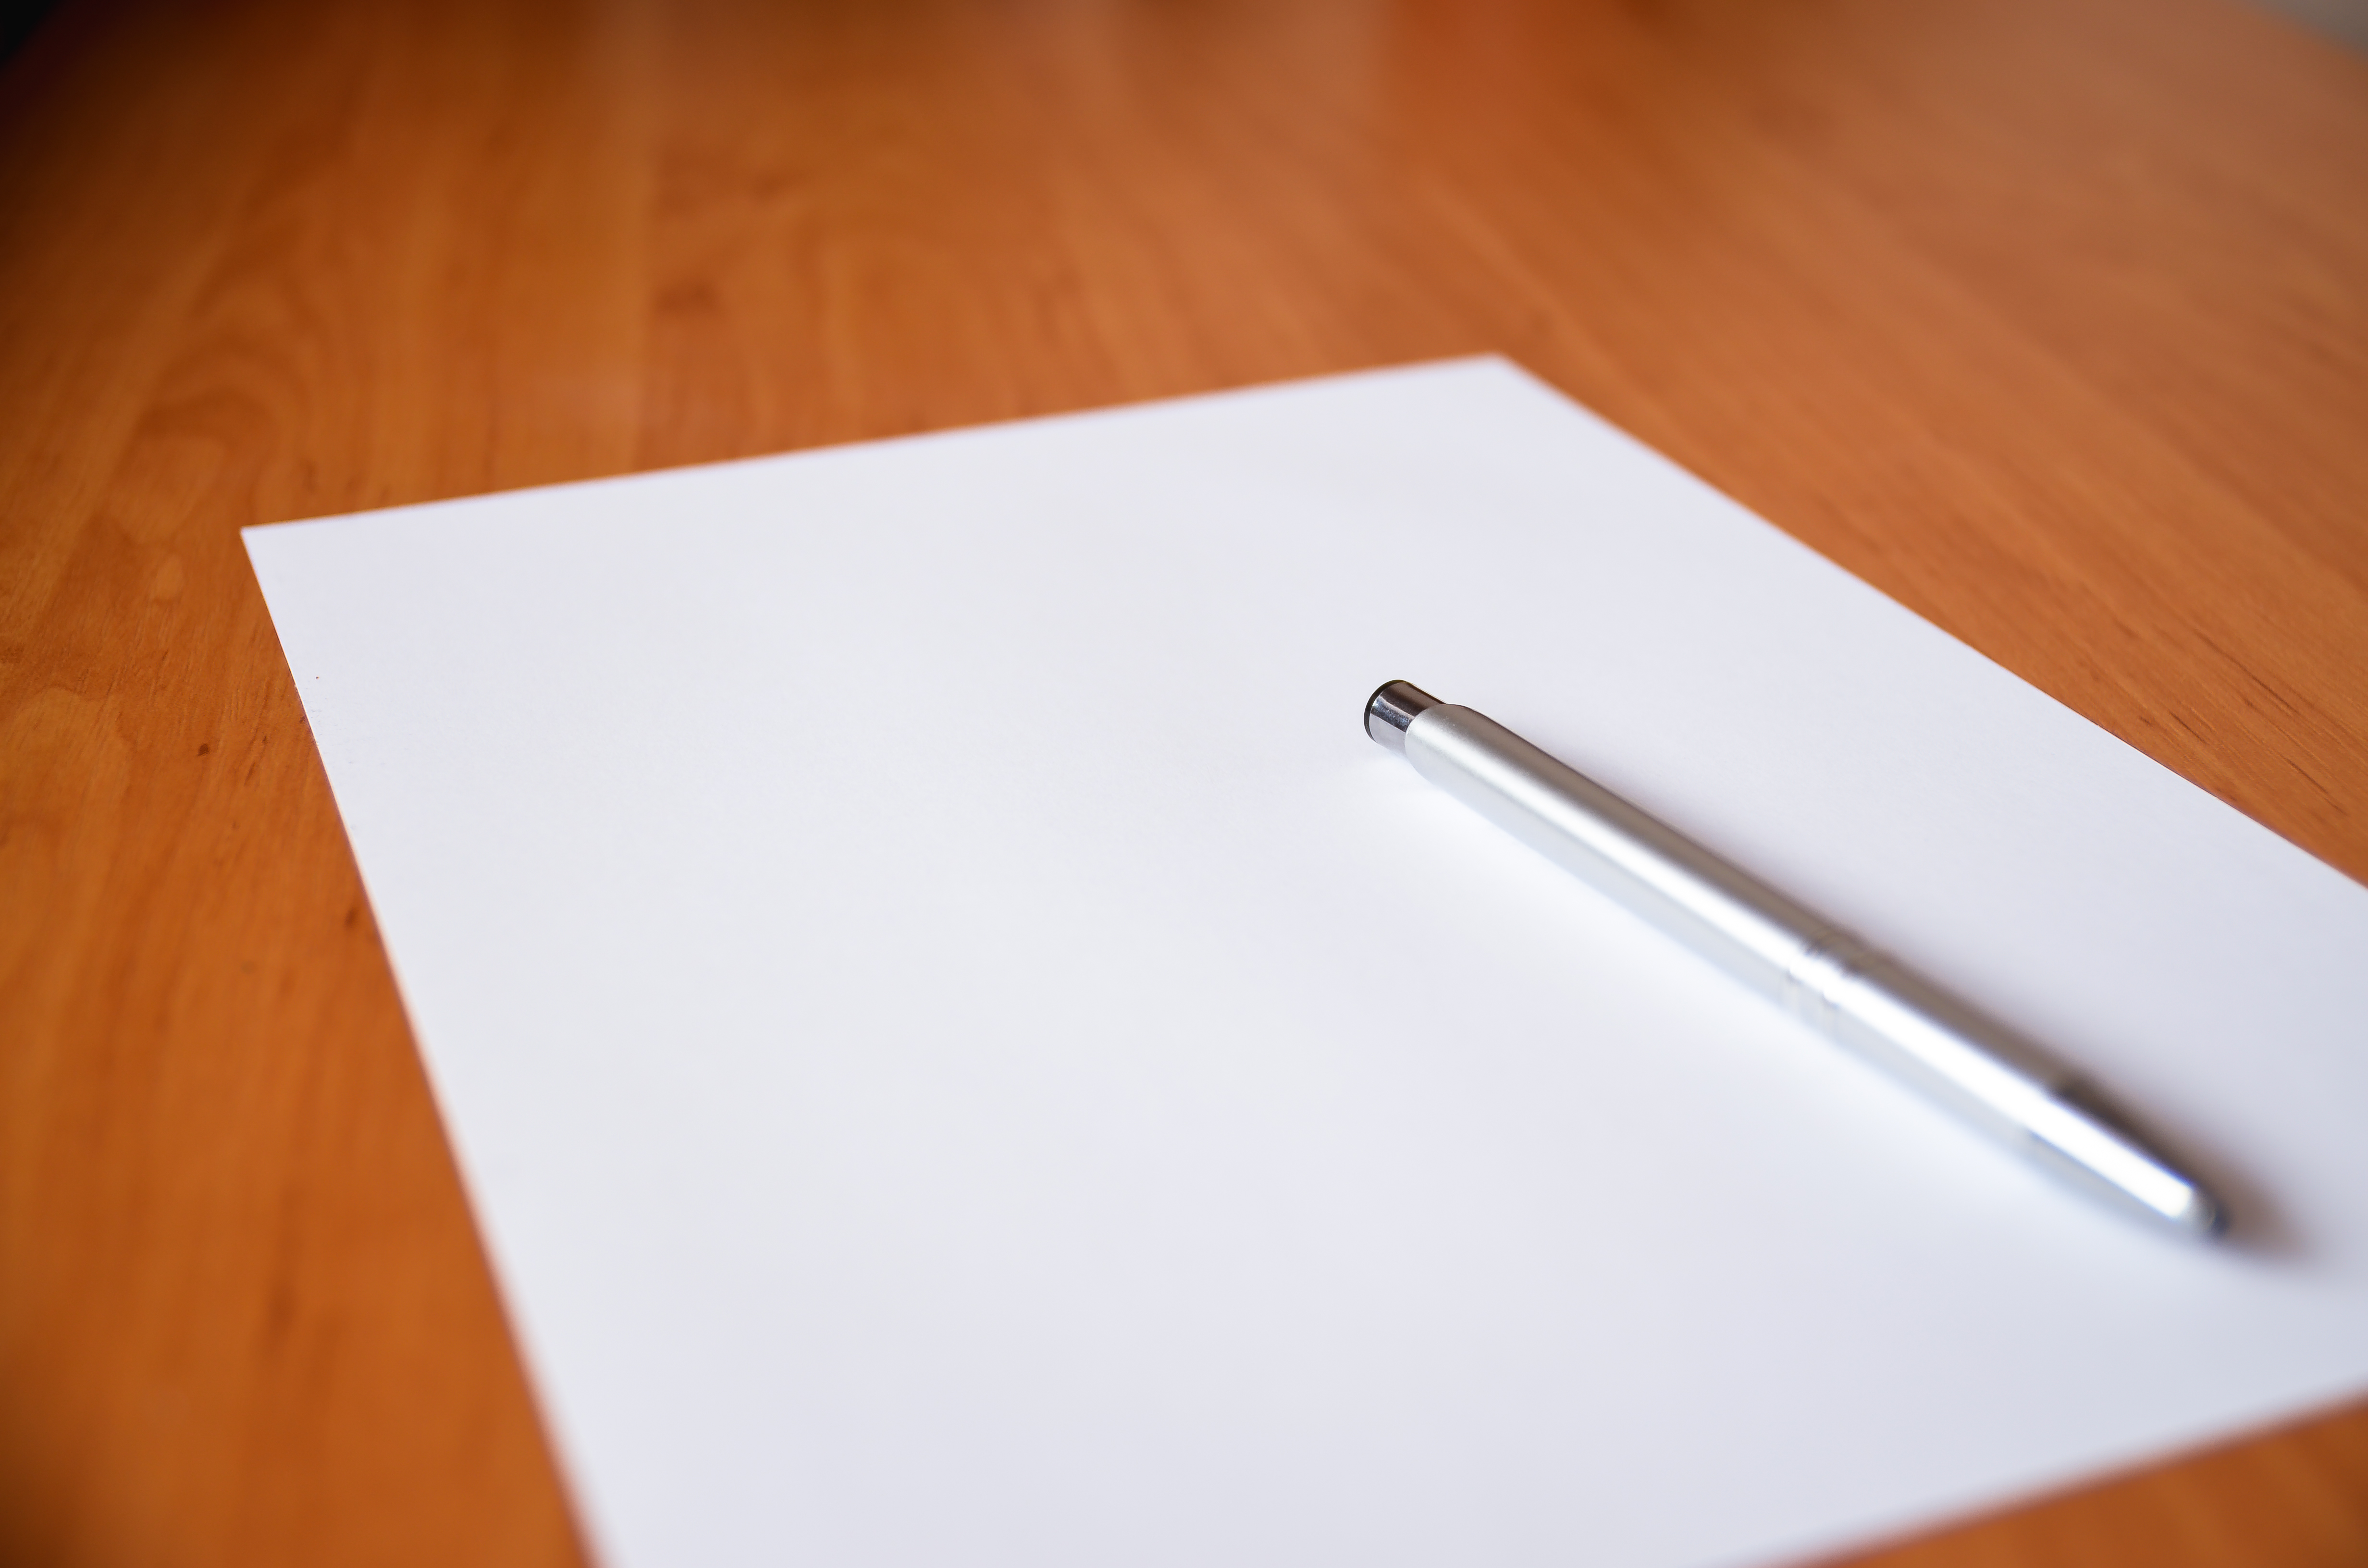 Sheet of paper. Лист бумаги. Лист бумаги и ручка. Пустой лист бумаги. Чистый лист бумаги и ручка.